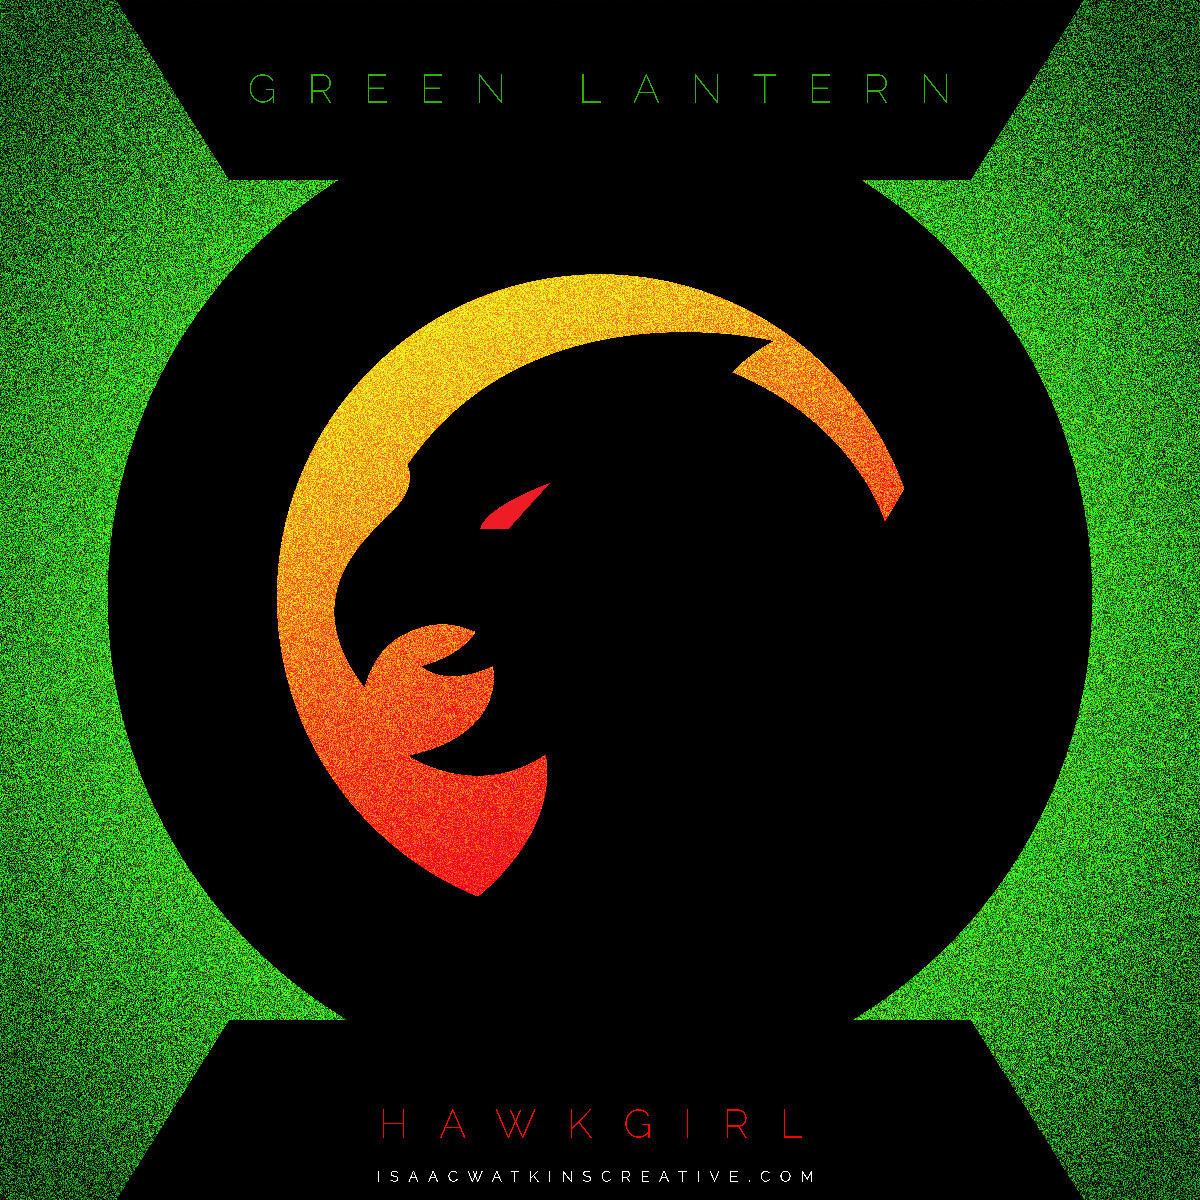 Green Hawk